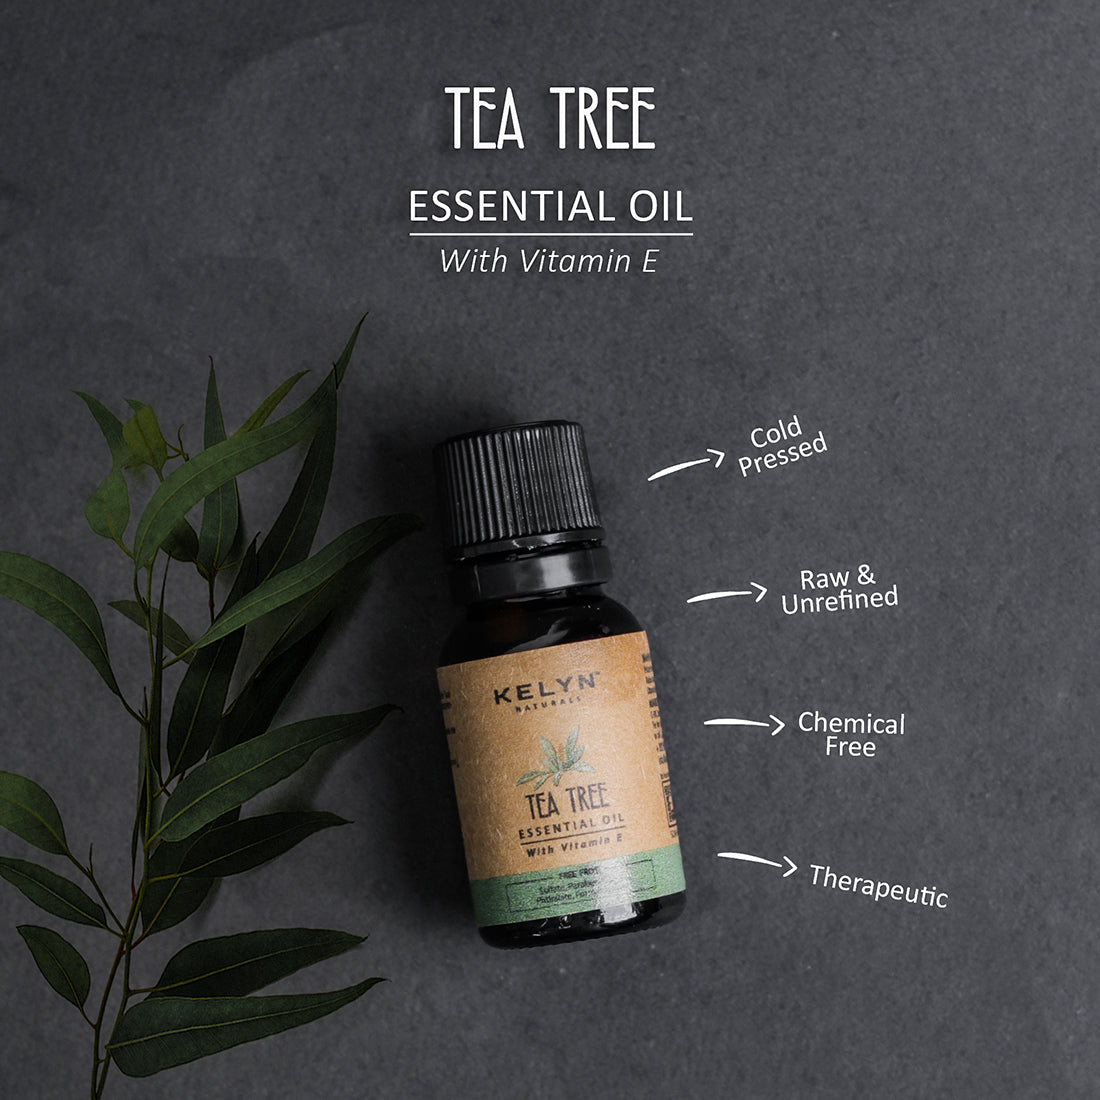 Kelyn Tea Tree Essential Oil with Vitamin E - 15ml